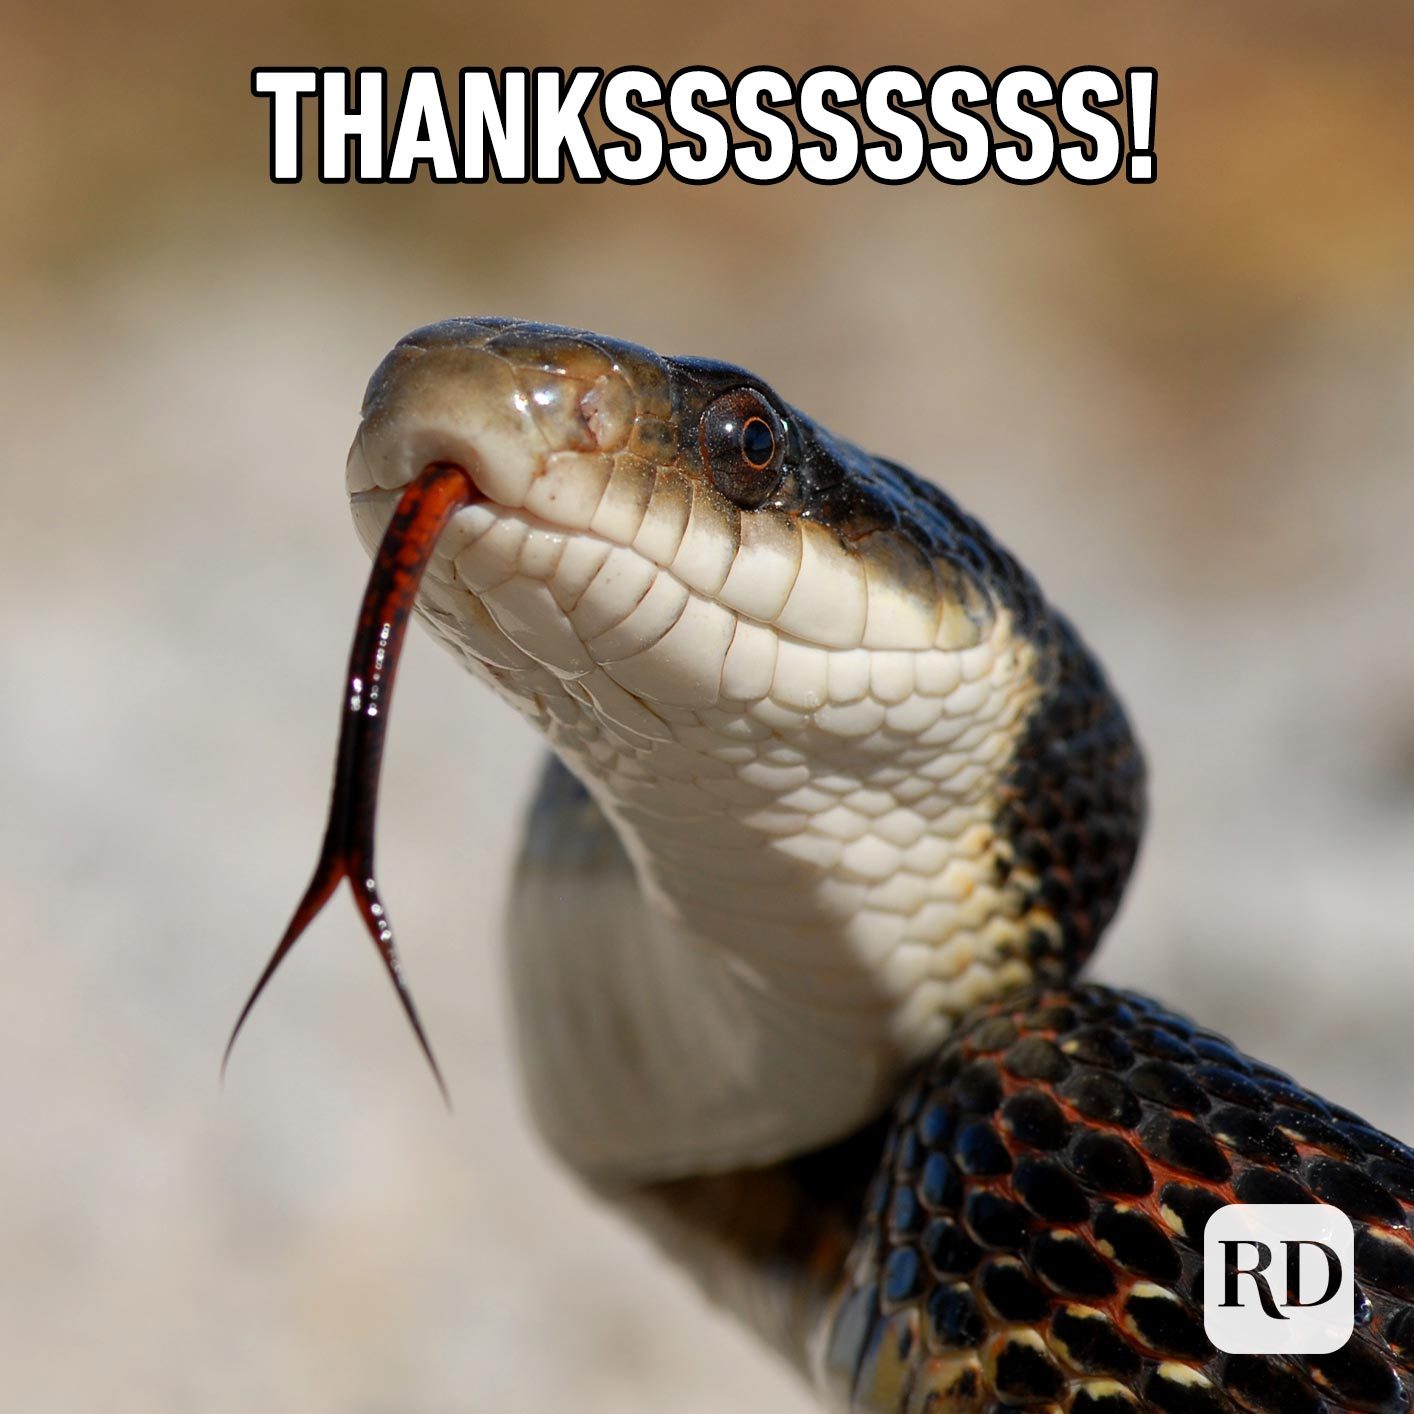 Snake. Meme text: Thankssssssss!